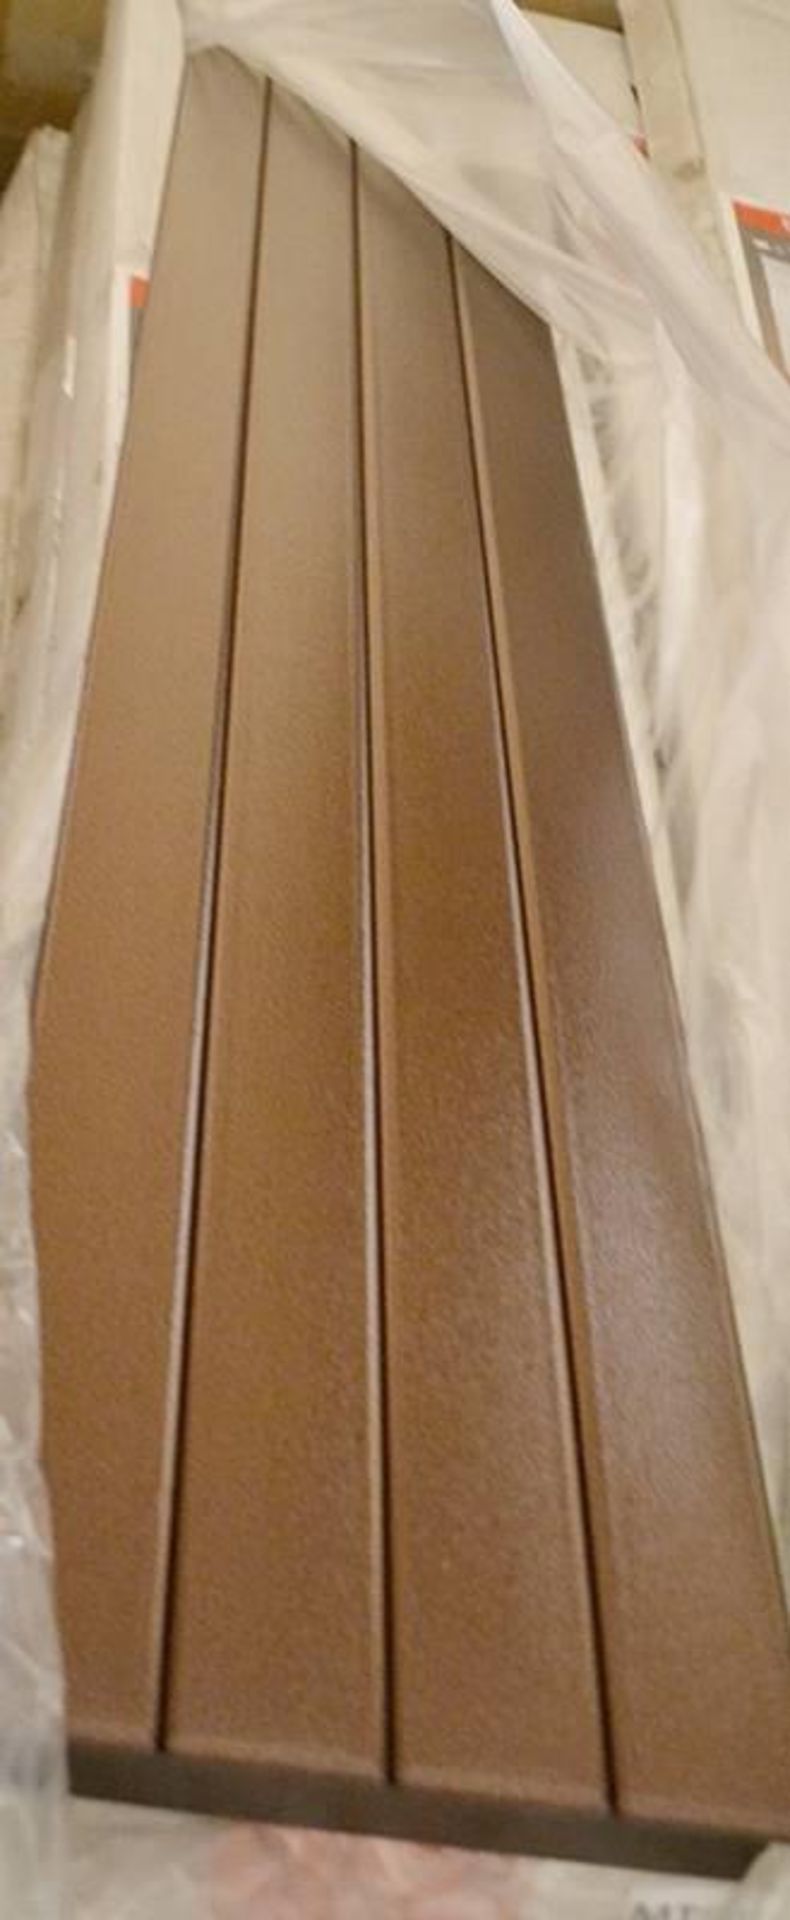 1 x Quinn Slieve Designer Single Panel Radiator in Copper - Contemporary Design - Will Enhance any I - Image 7 of 8